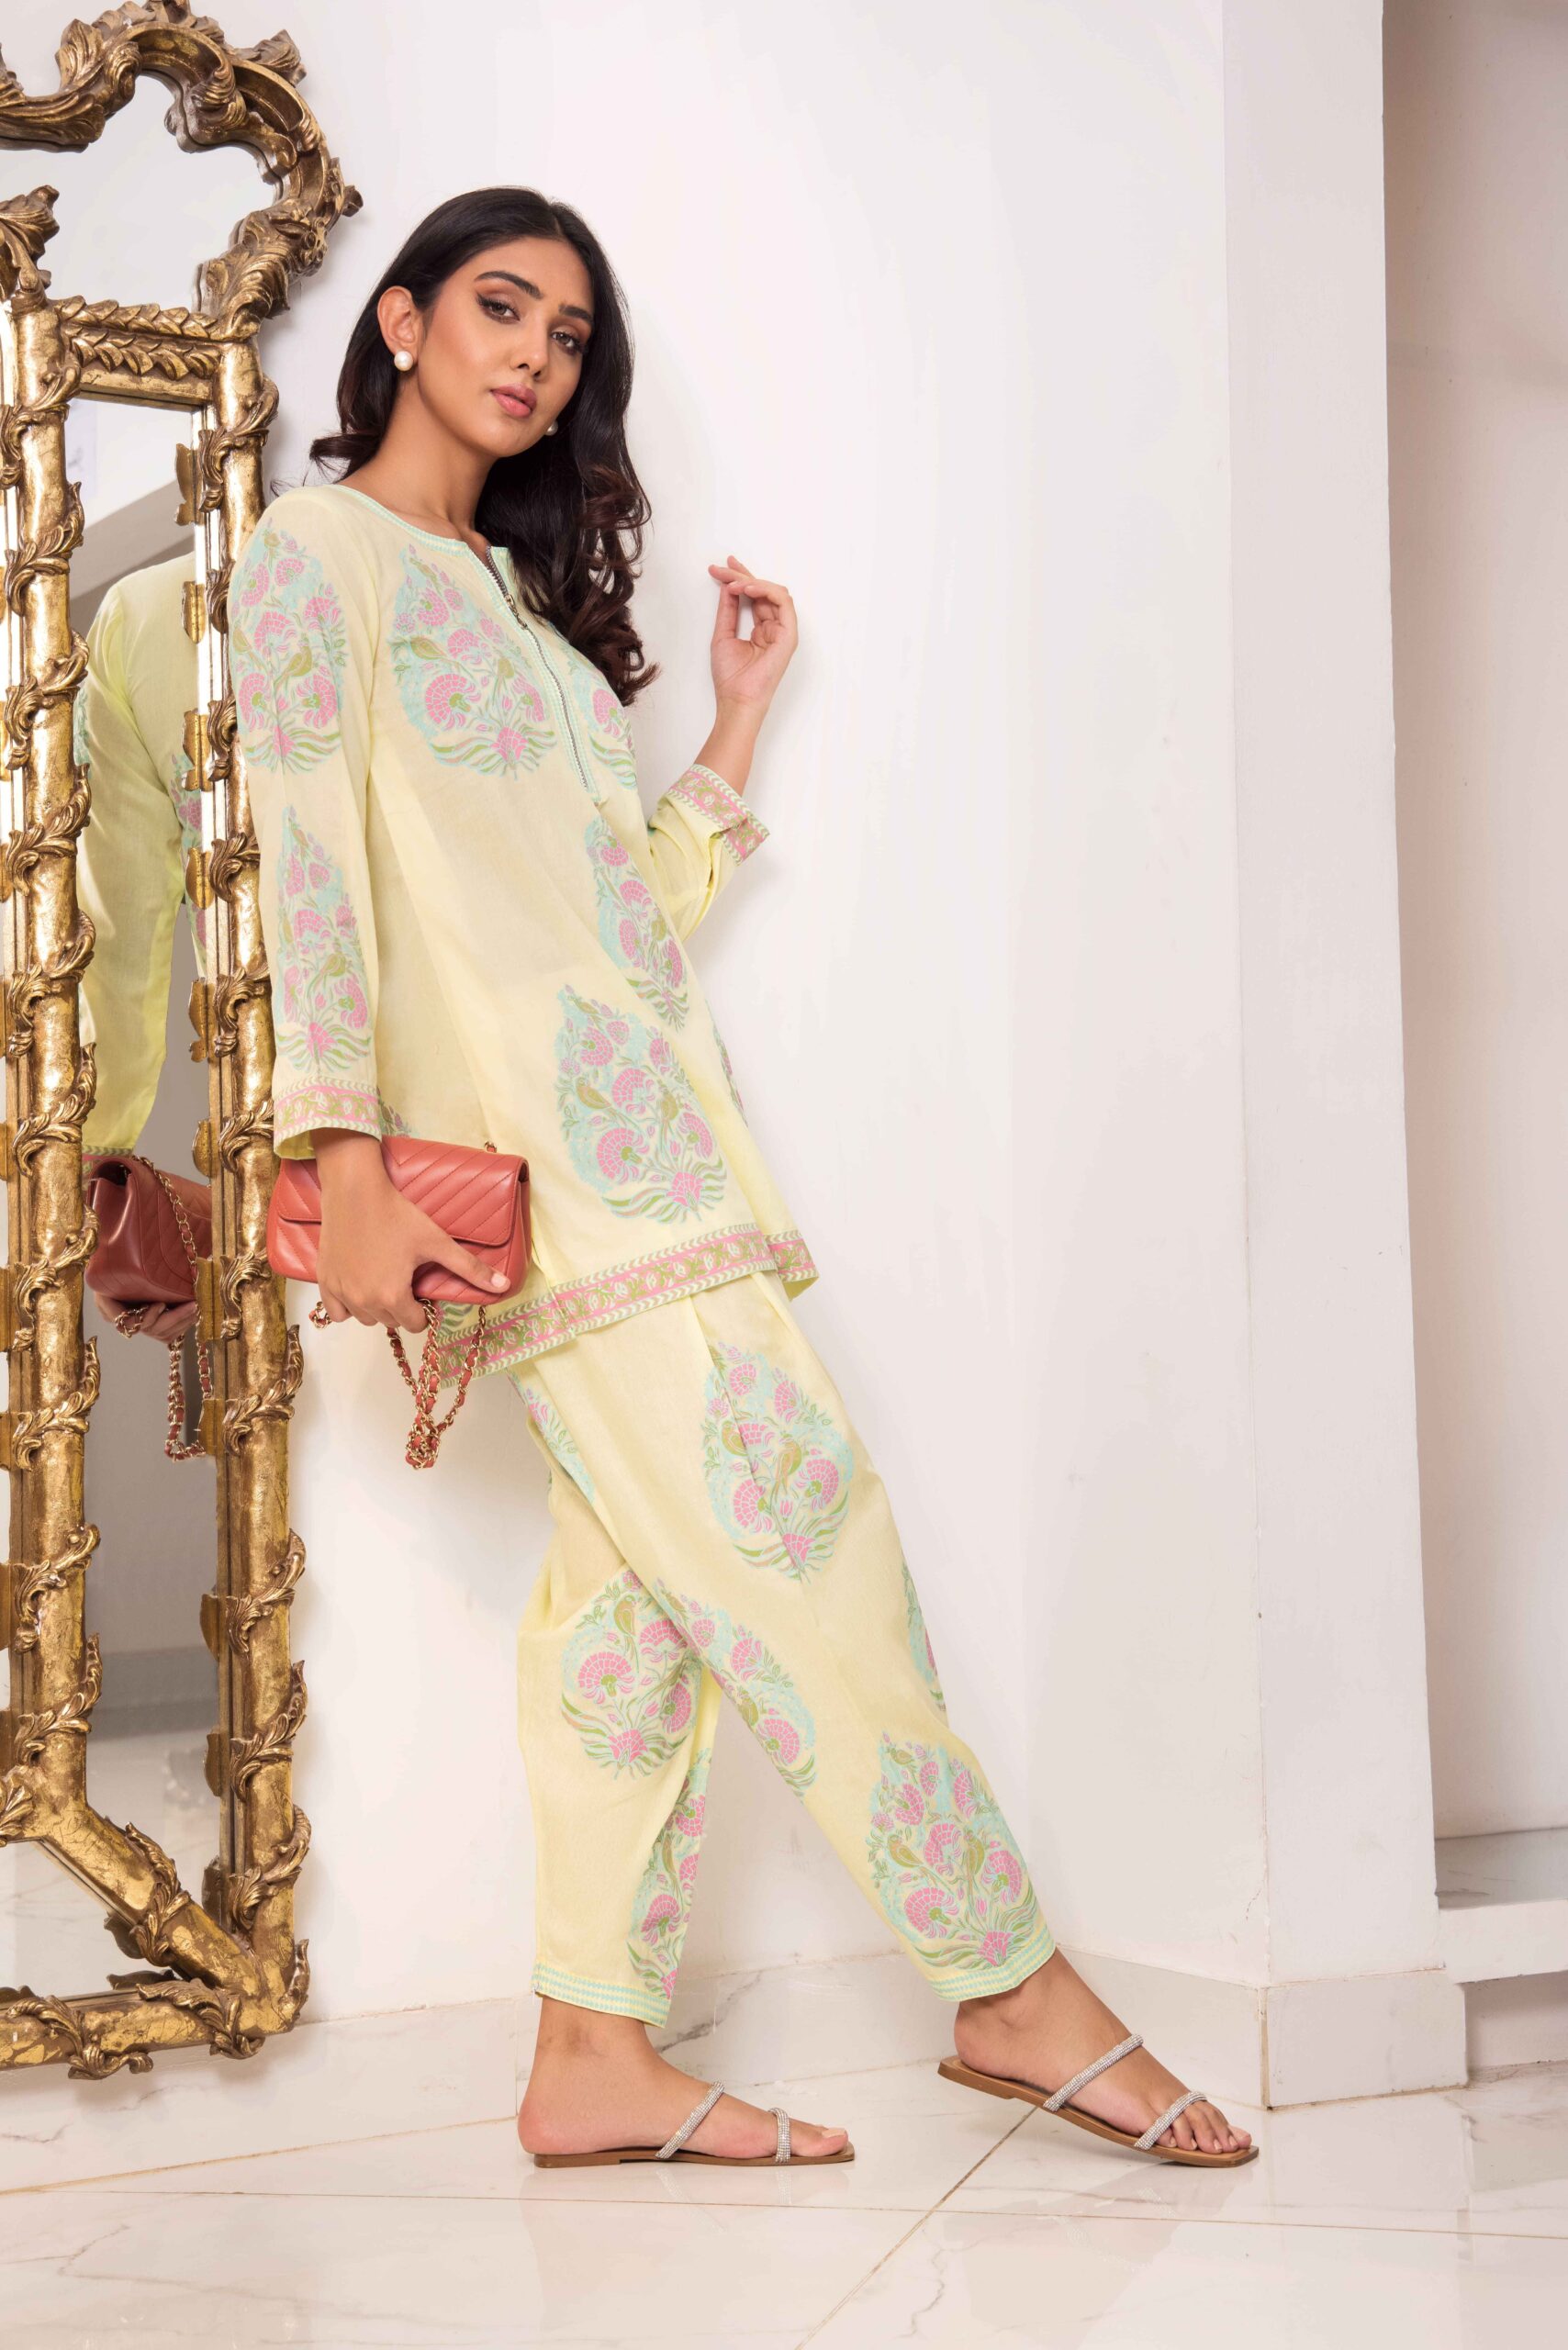 SHK-1123 - Top Pakistani Clothing Brands Online